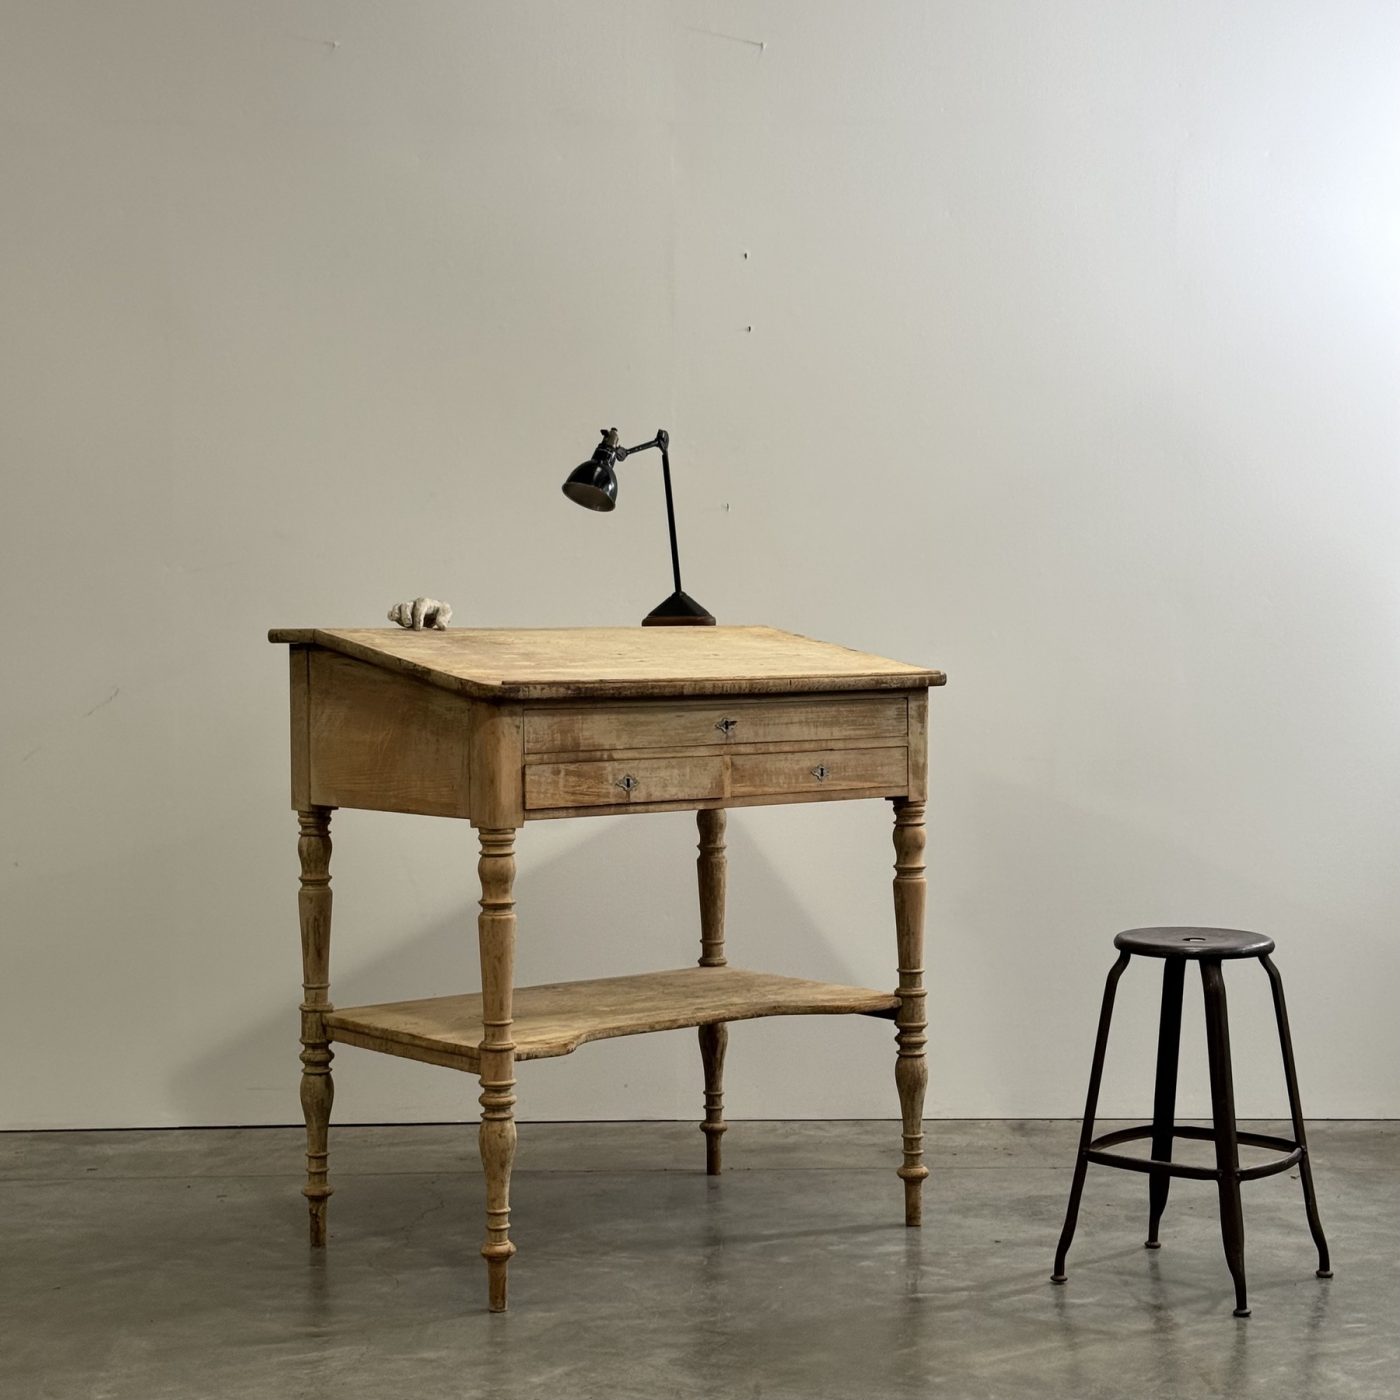 objet-vagabond-painted-desk0006